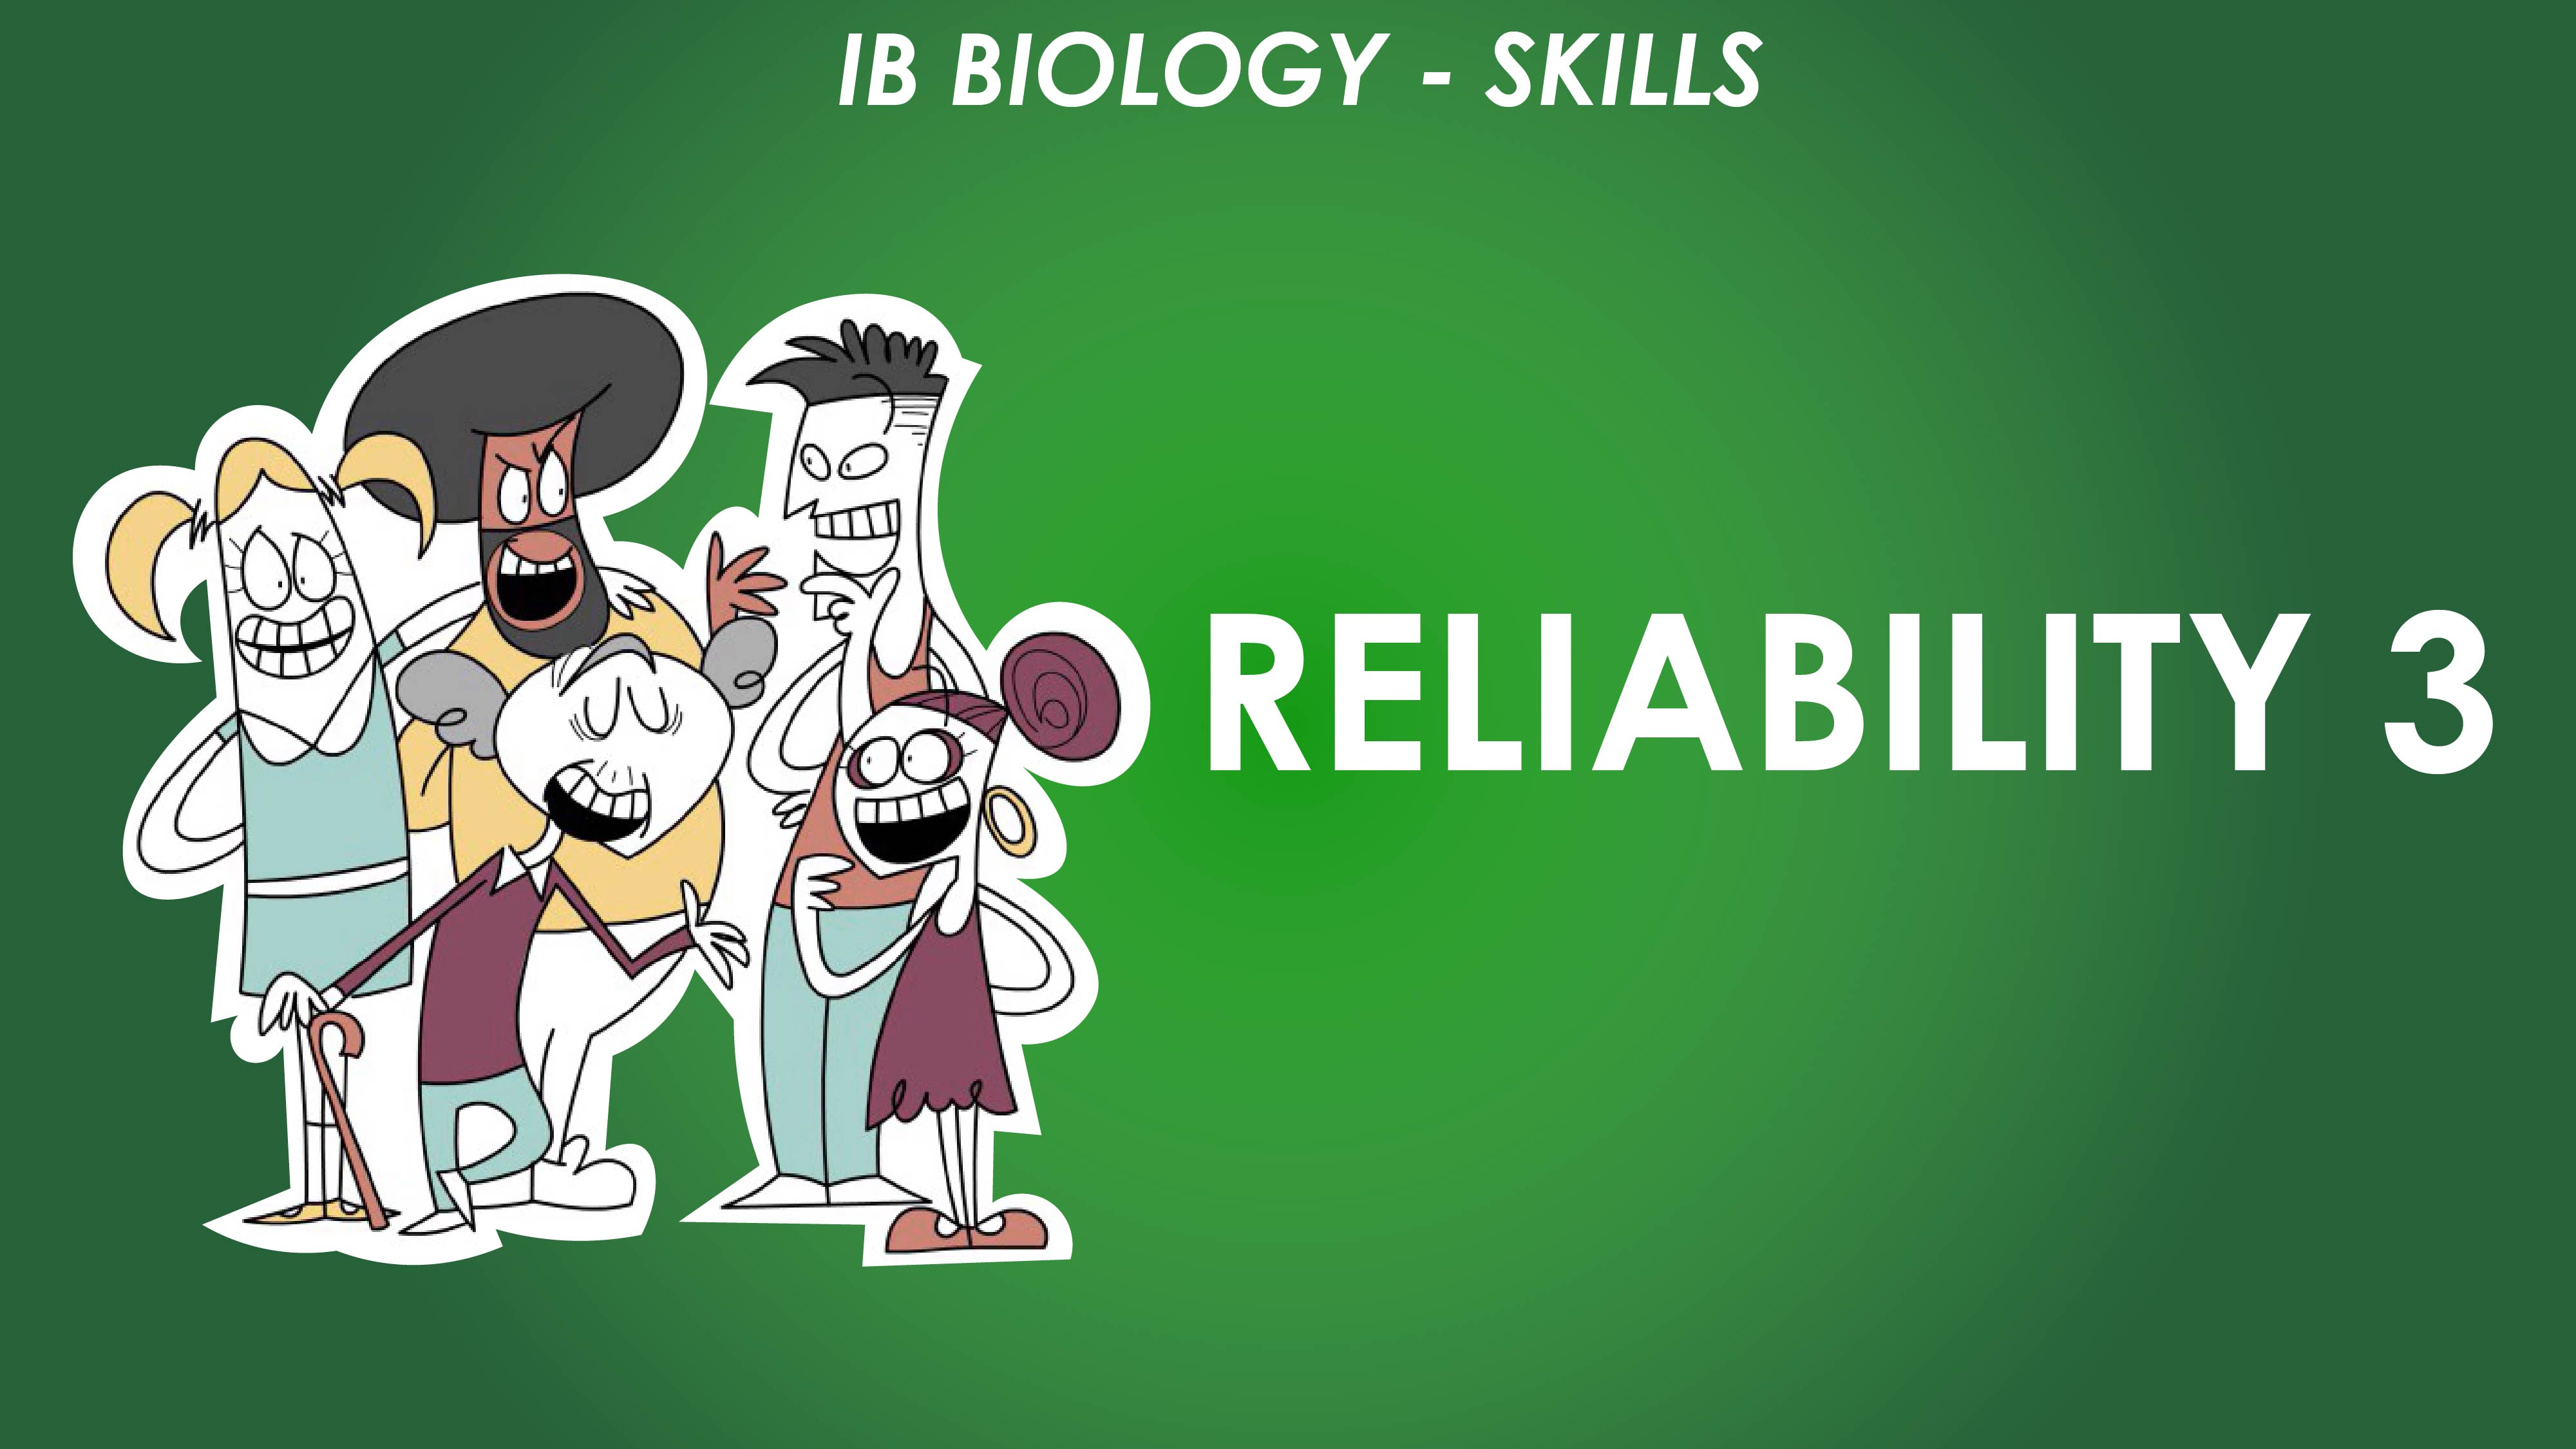 Reliability 3 - IB Biology Skills